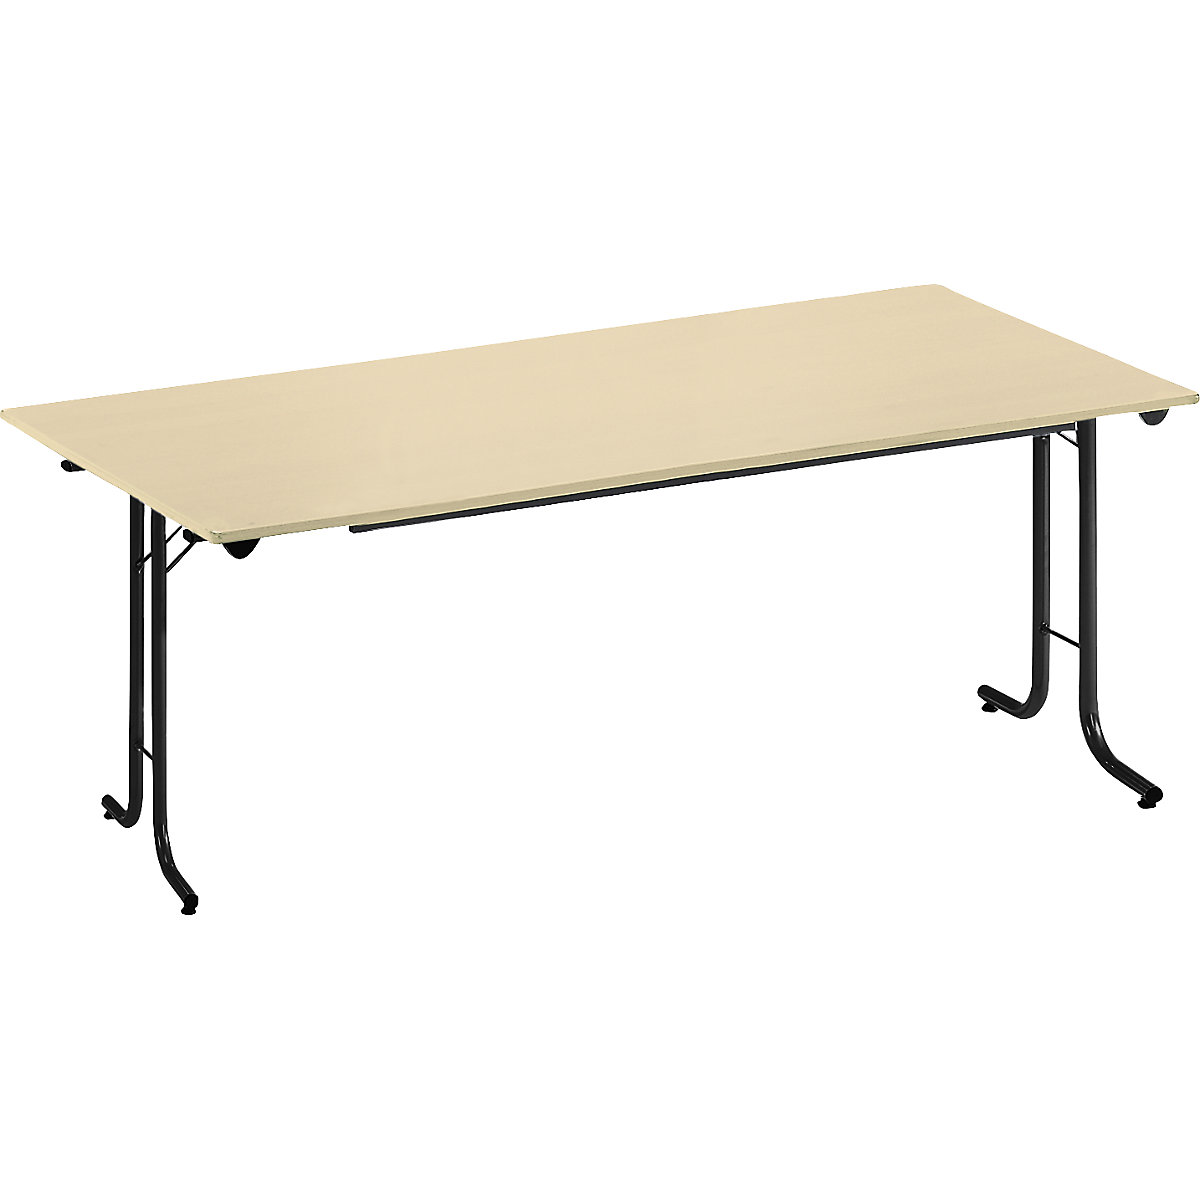 Folding table, with rounded edges, round tubular frame, rectangular top, 1600 x 700 mm, black frame, maple finish tabletop-8